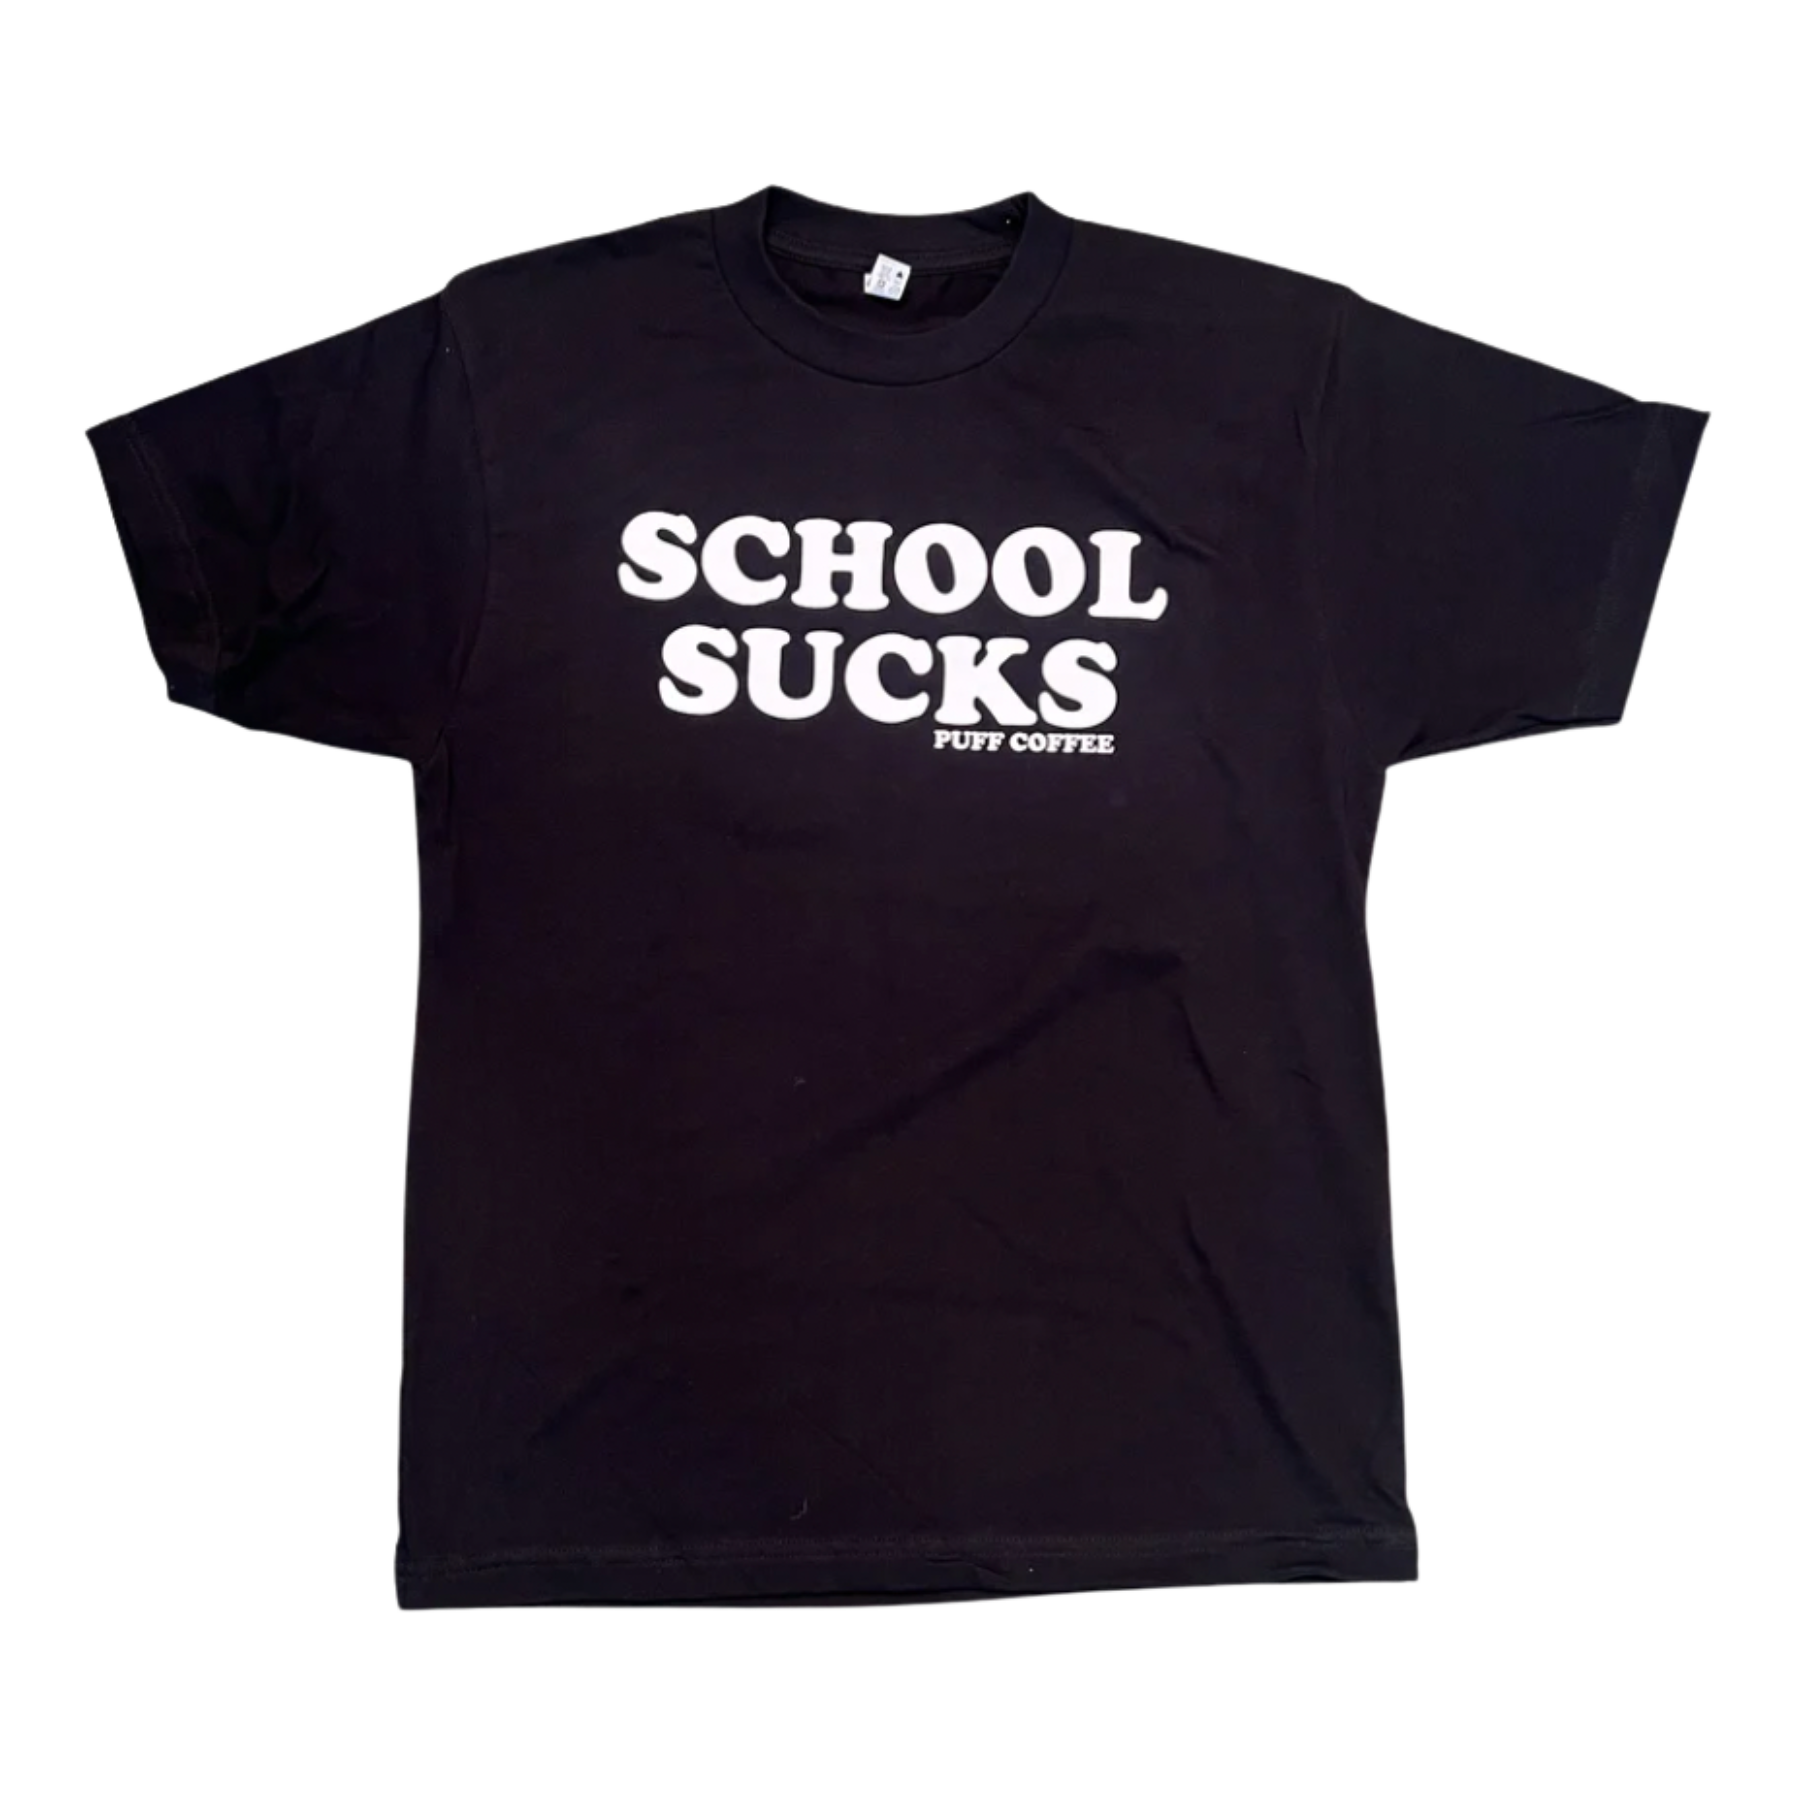 School Sucks T-Shirt